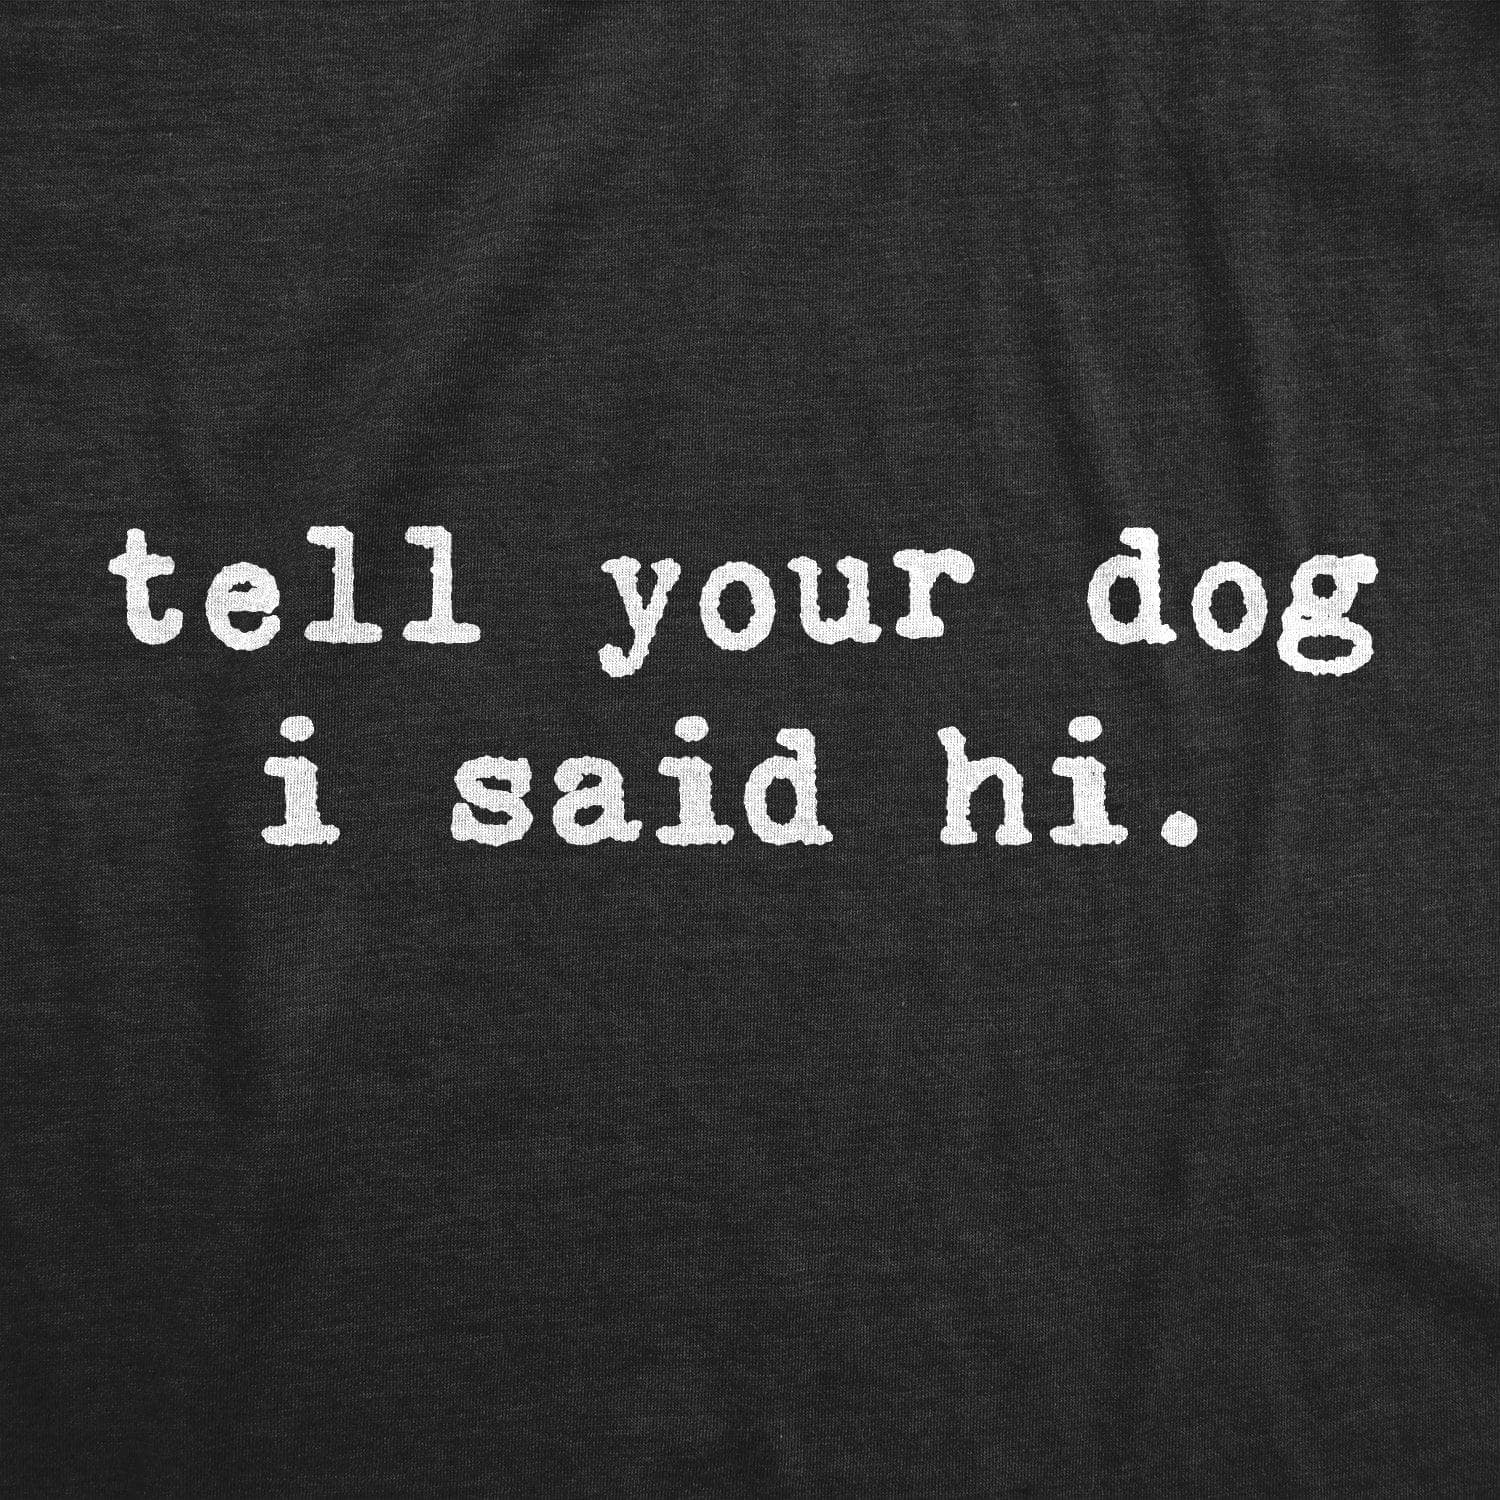 Tell Your Dog I Said Hi Women's Tshirt  -  Crazy Dog T-Shirts